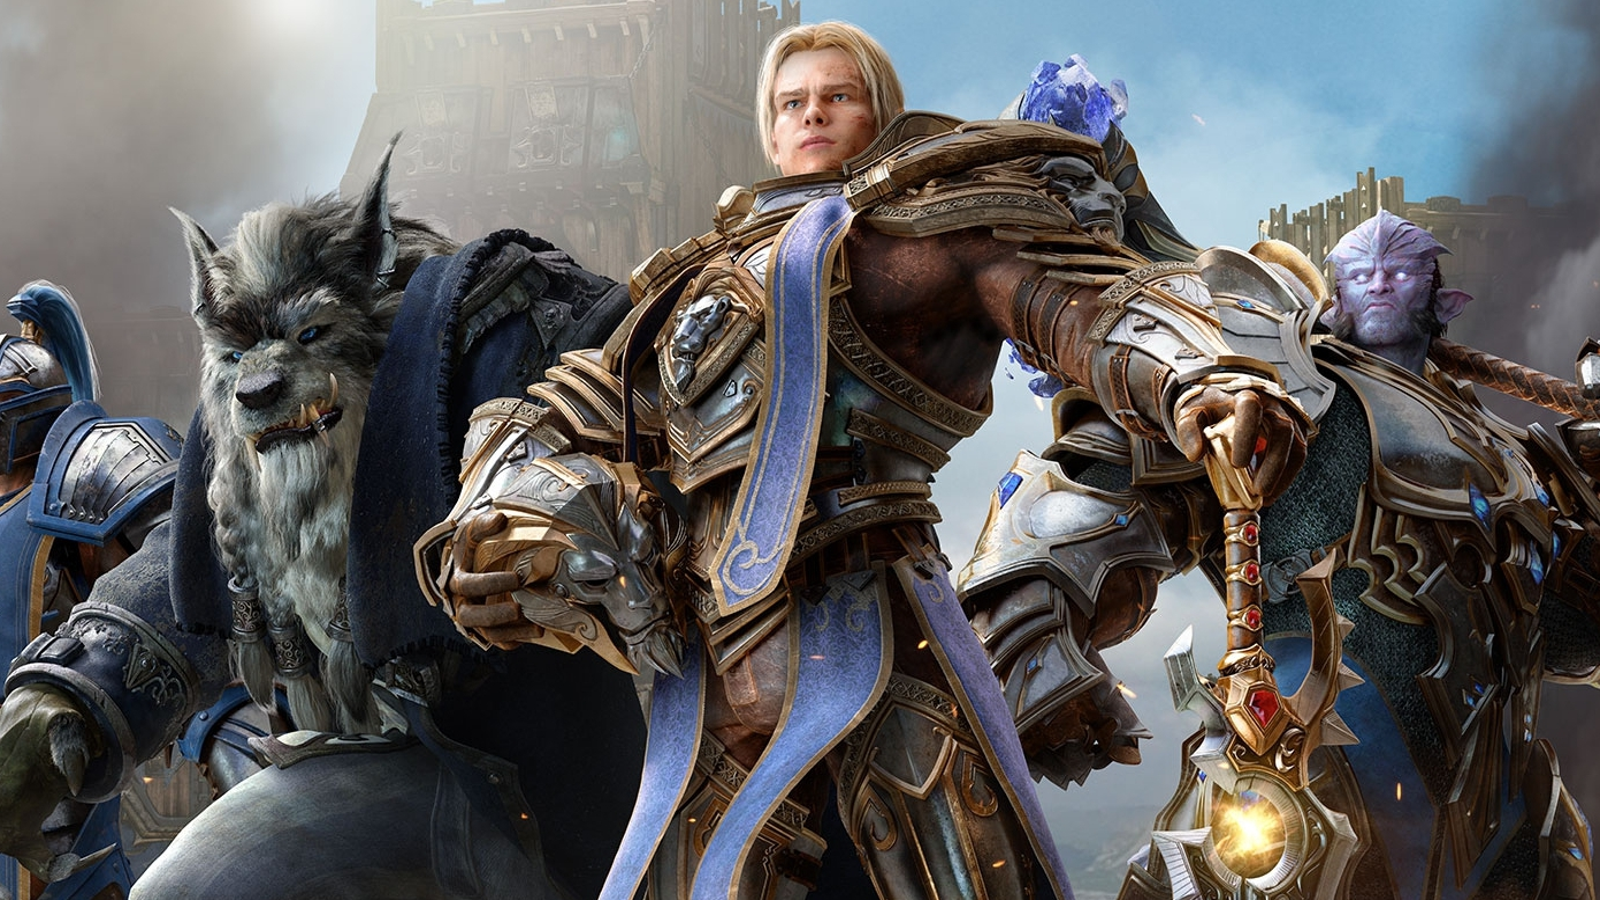 Lançamento World of Warcraft: Battle for Azeroth